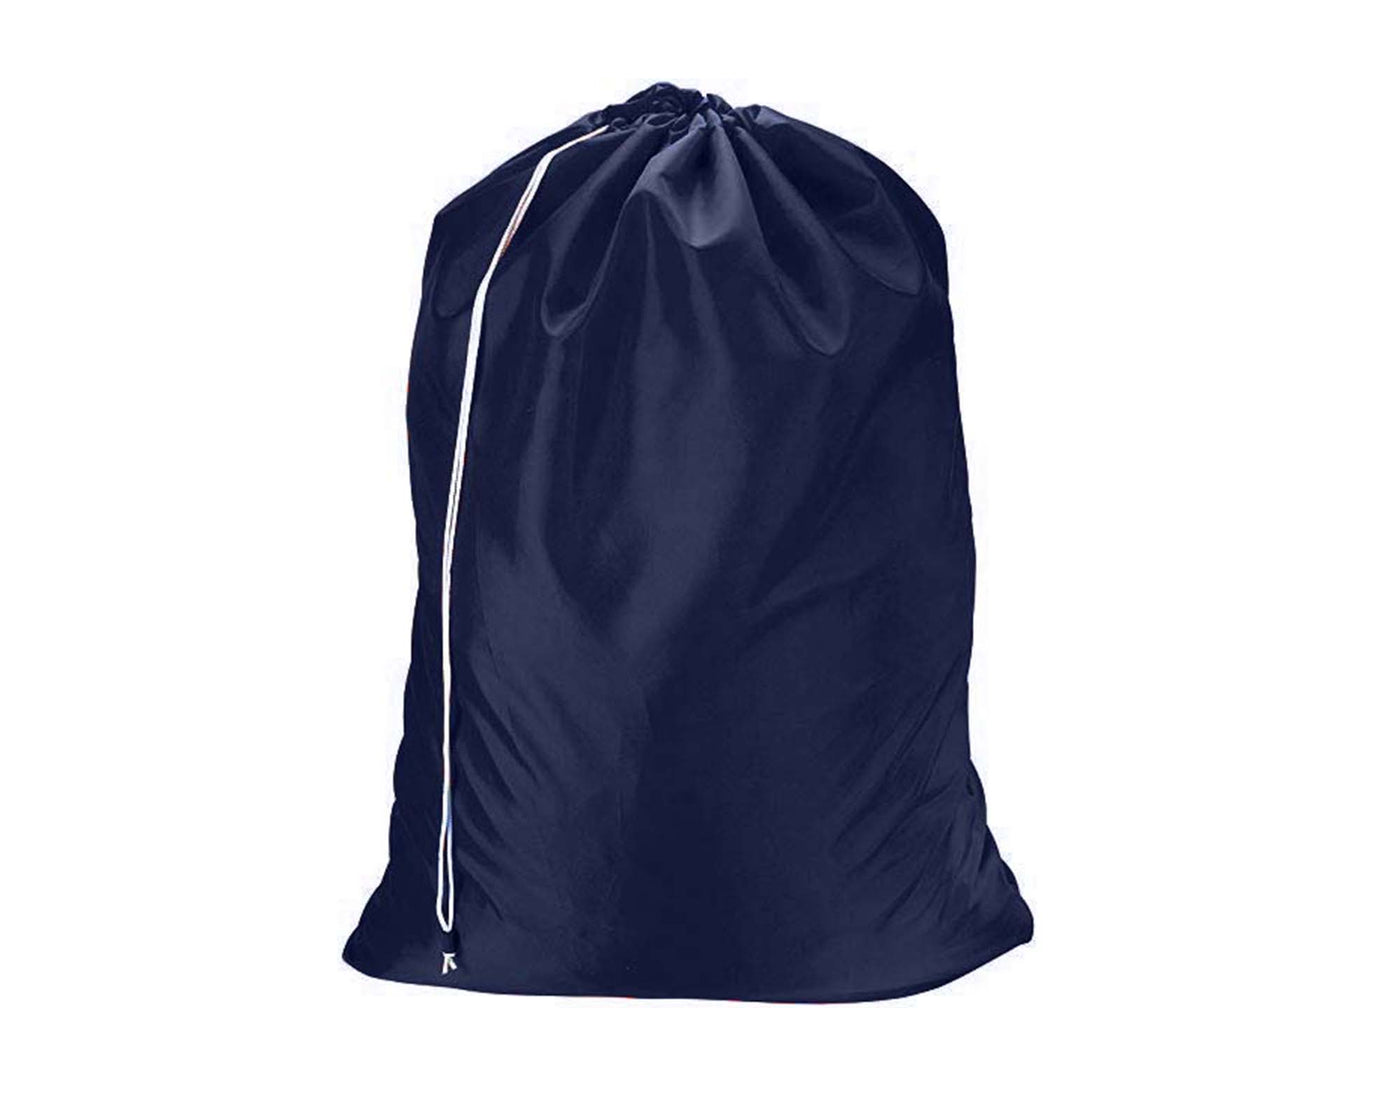 Laundry Bags Nylon 30